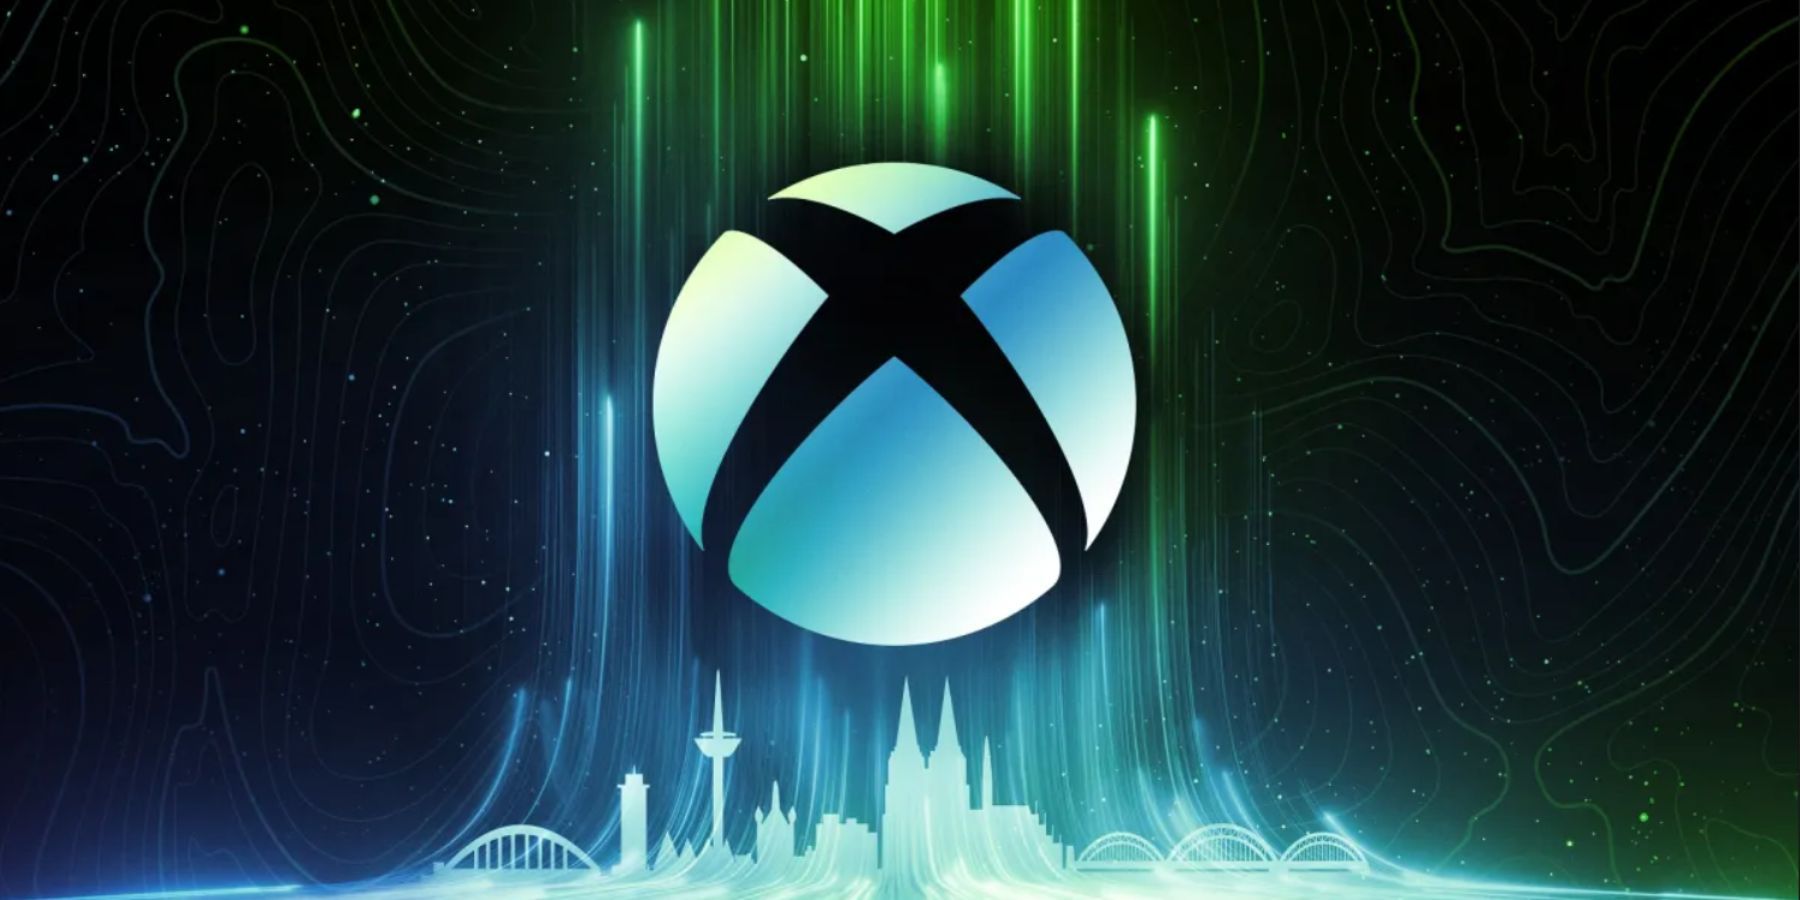 Xbox Brand Logo